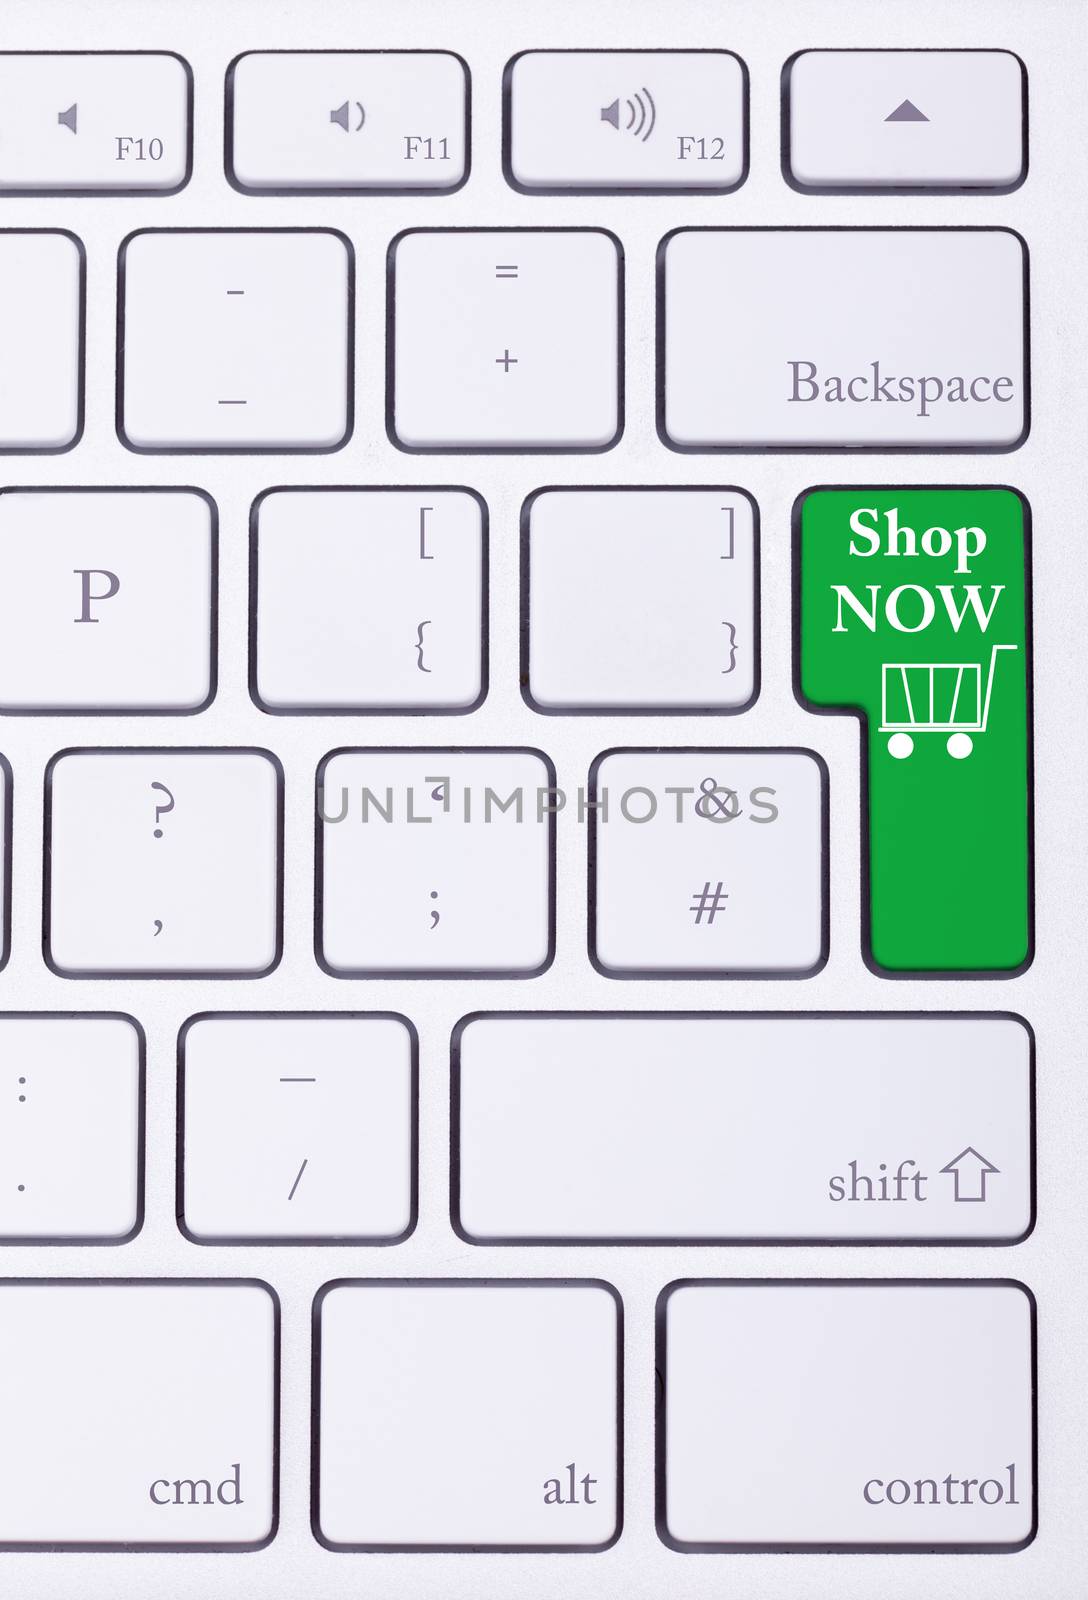 Shop now green key on aluminium keyboard by DCStudio